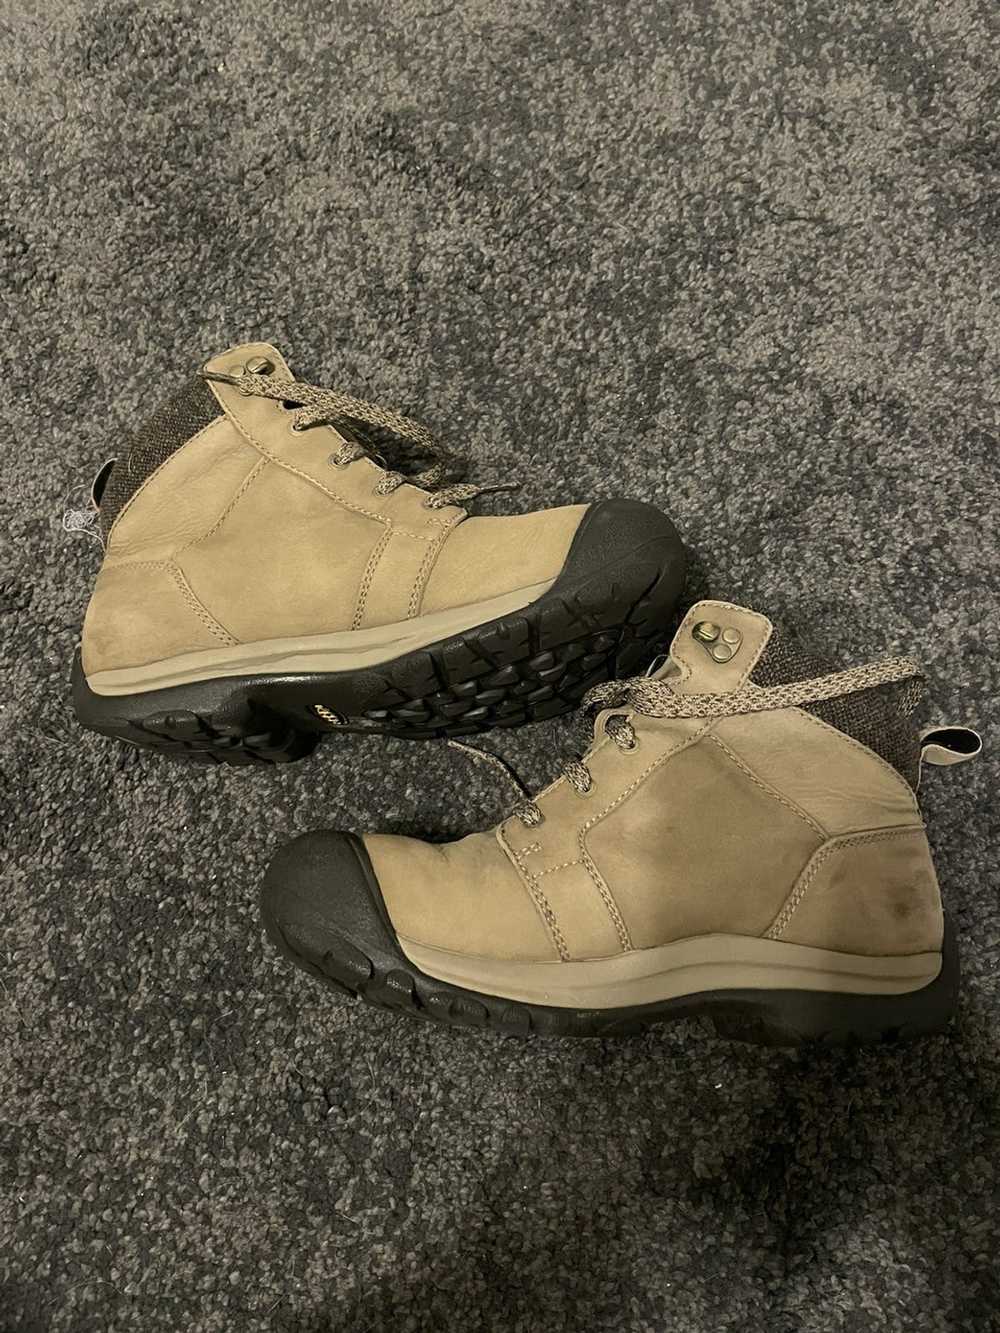 Vintage Hiking boots - image 9